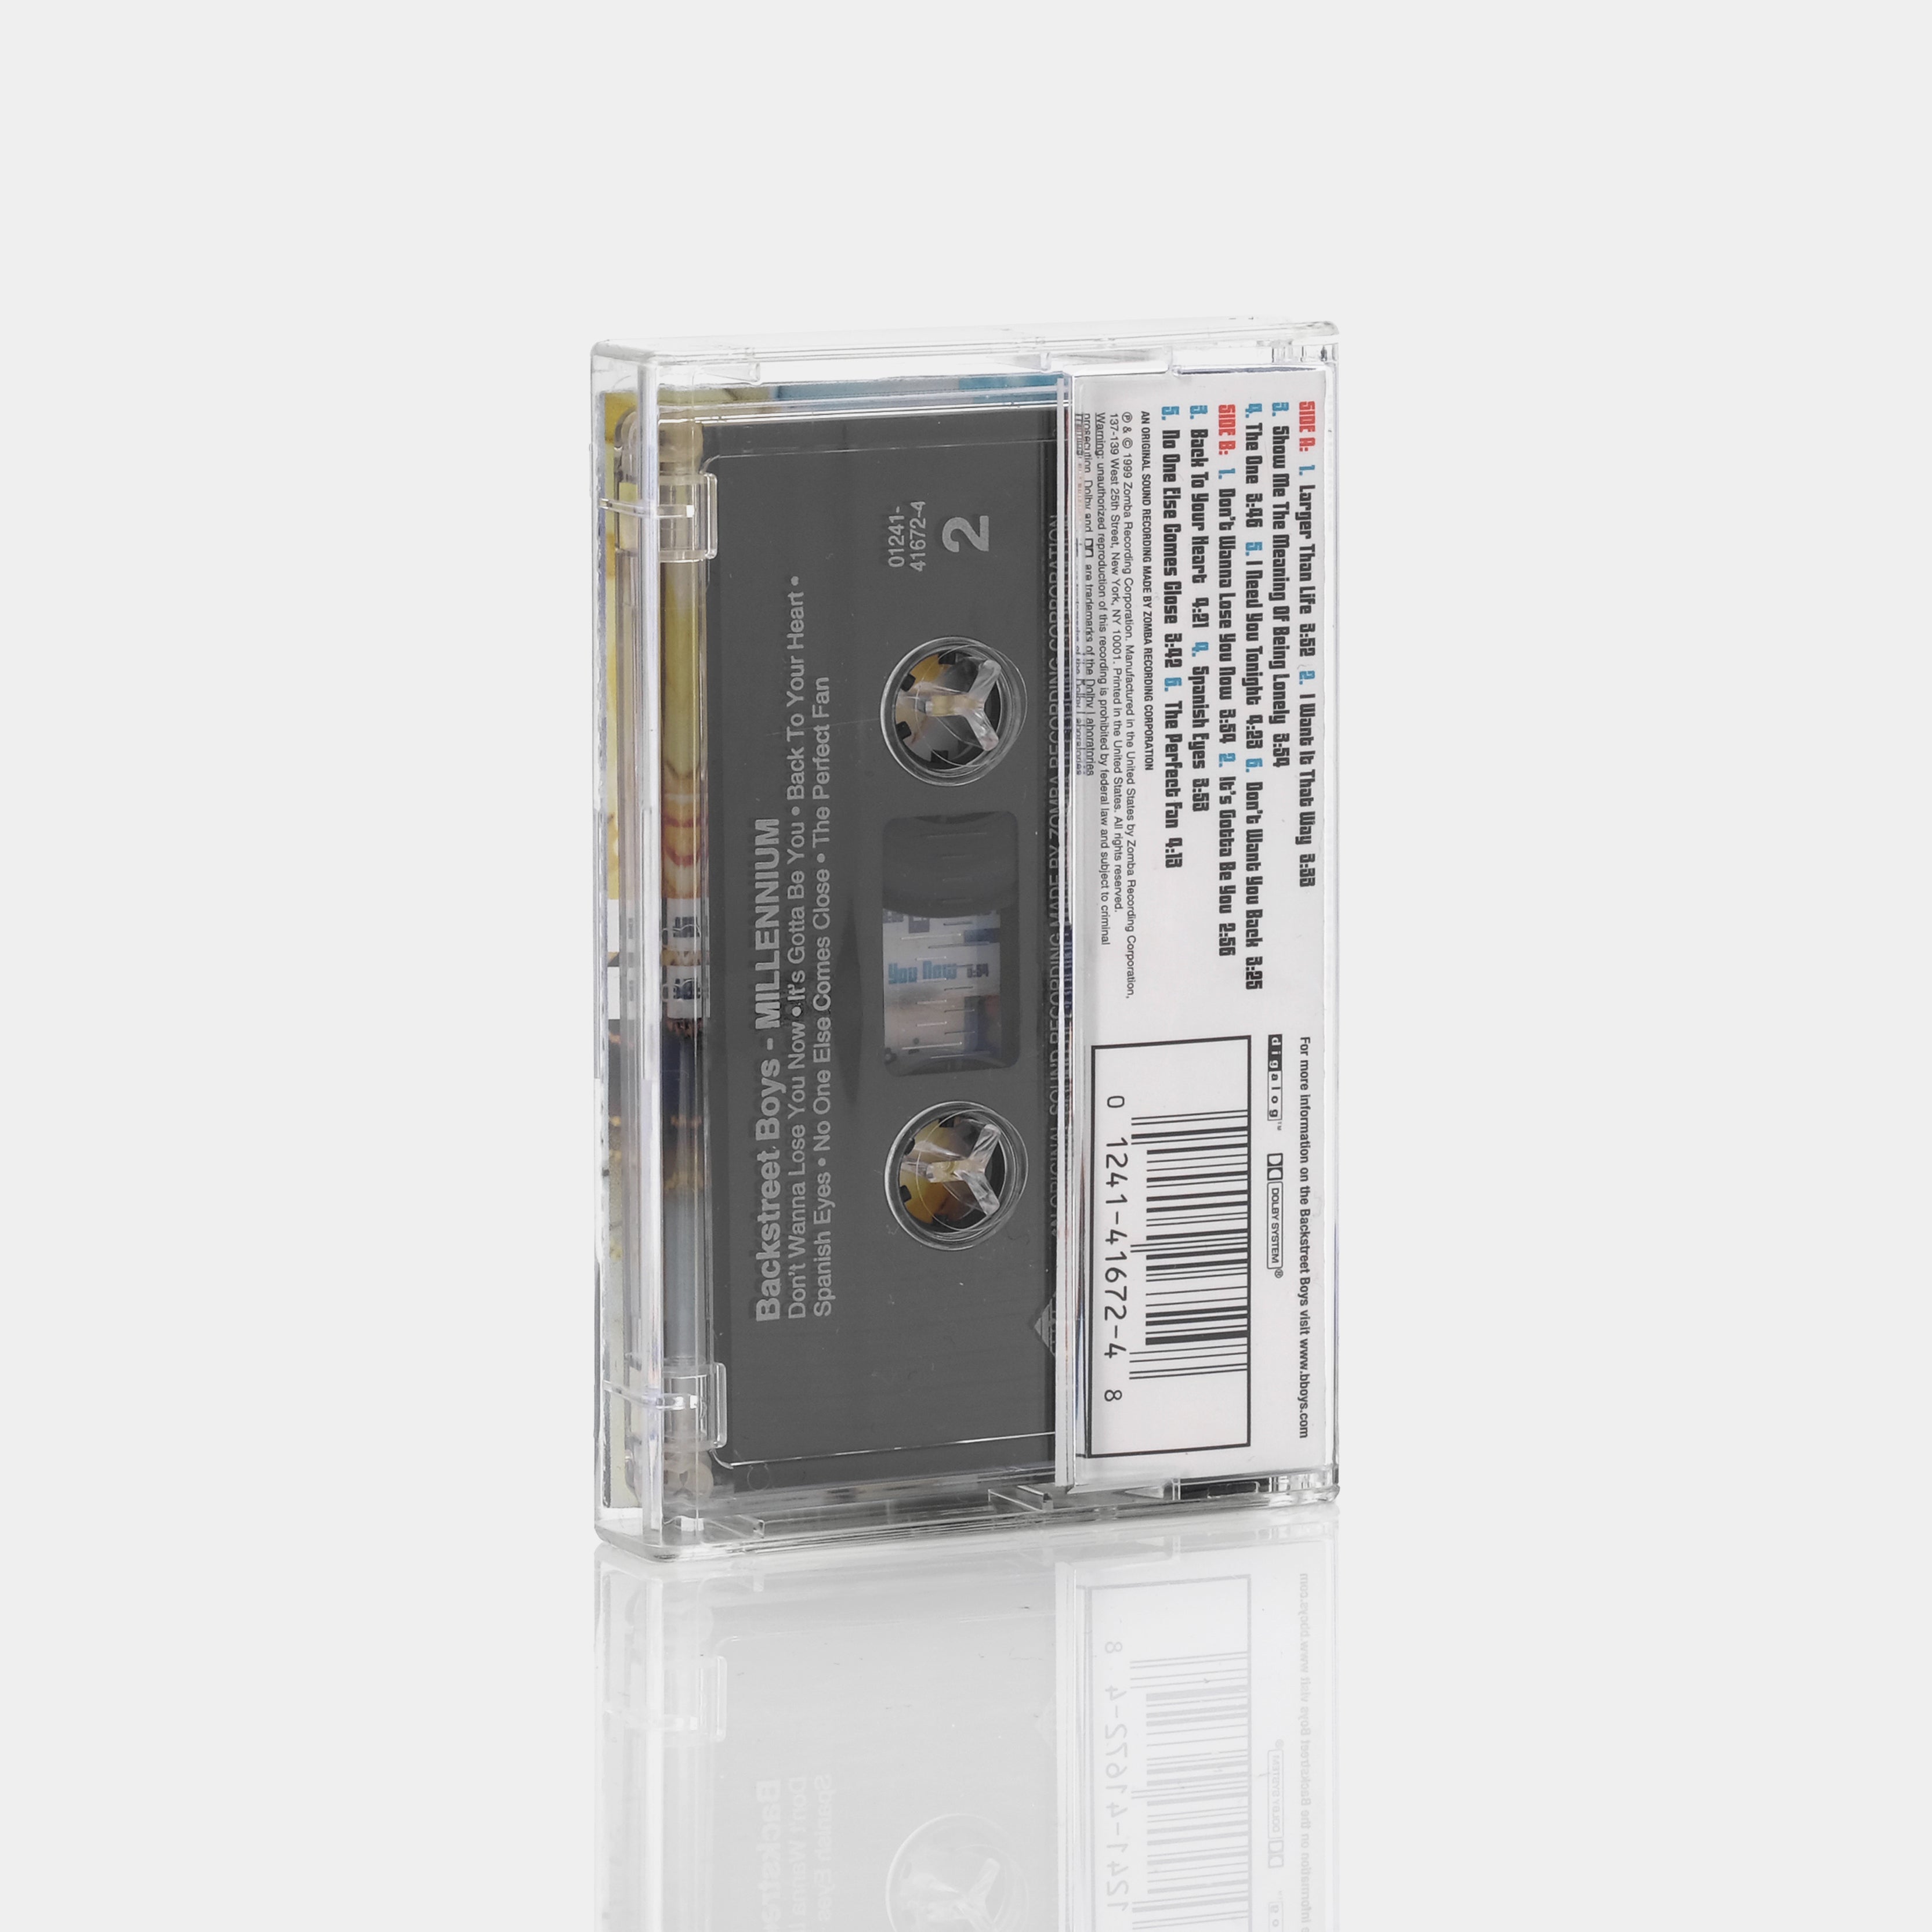 Backstreet Boys - Millennium Cassette Tape